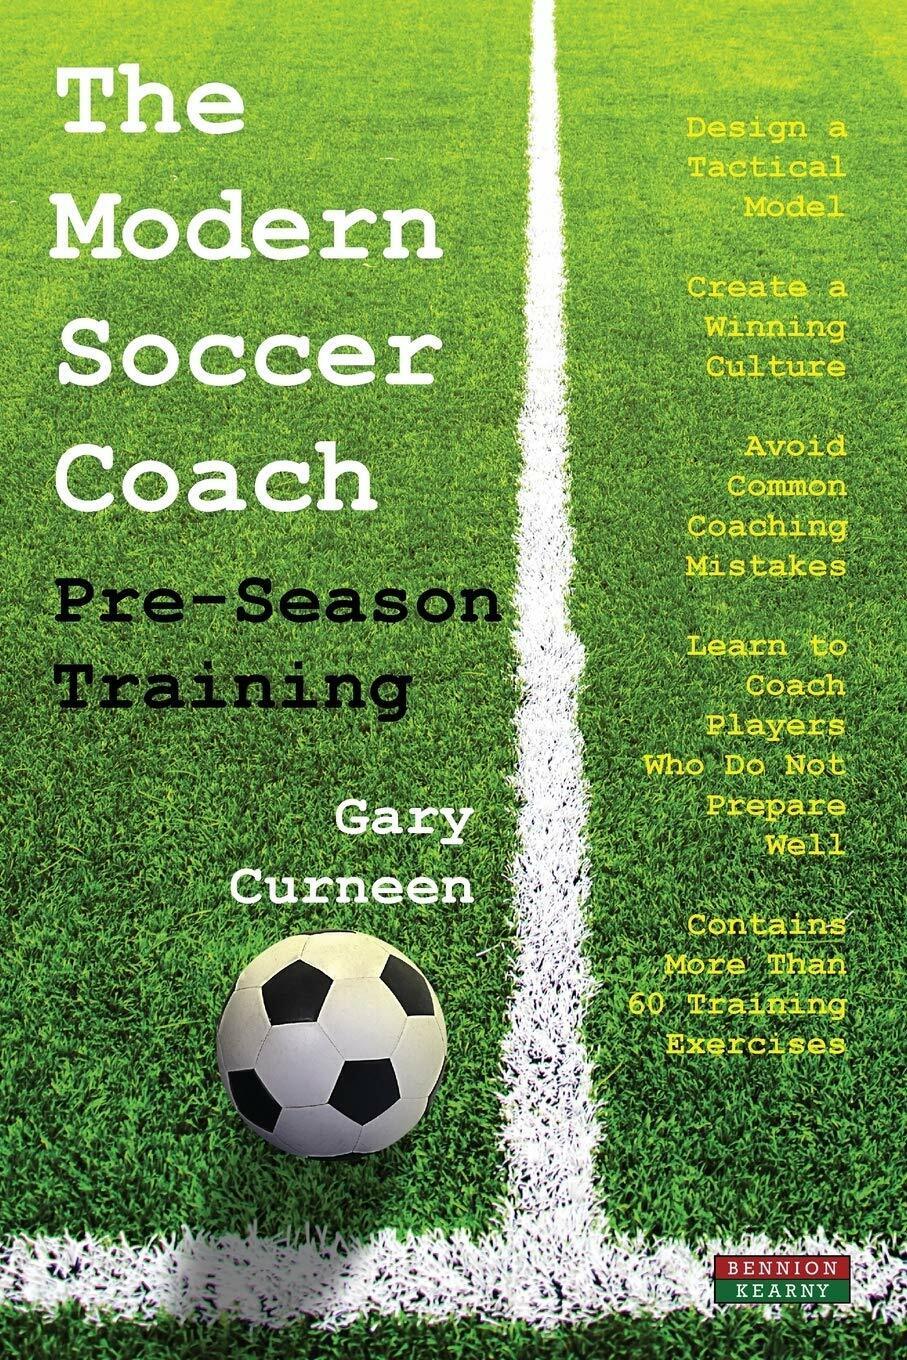 The Modern Soccer Coach - Gary Curneen - Bennion, 2021